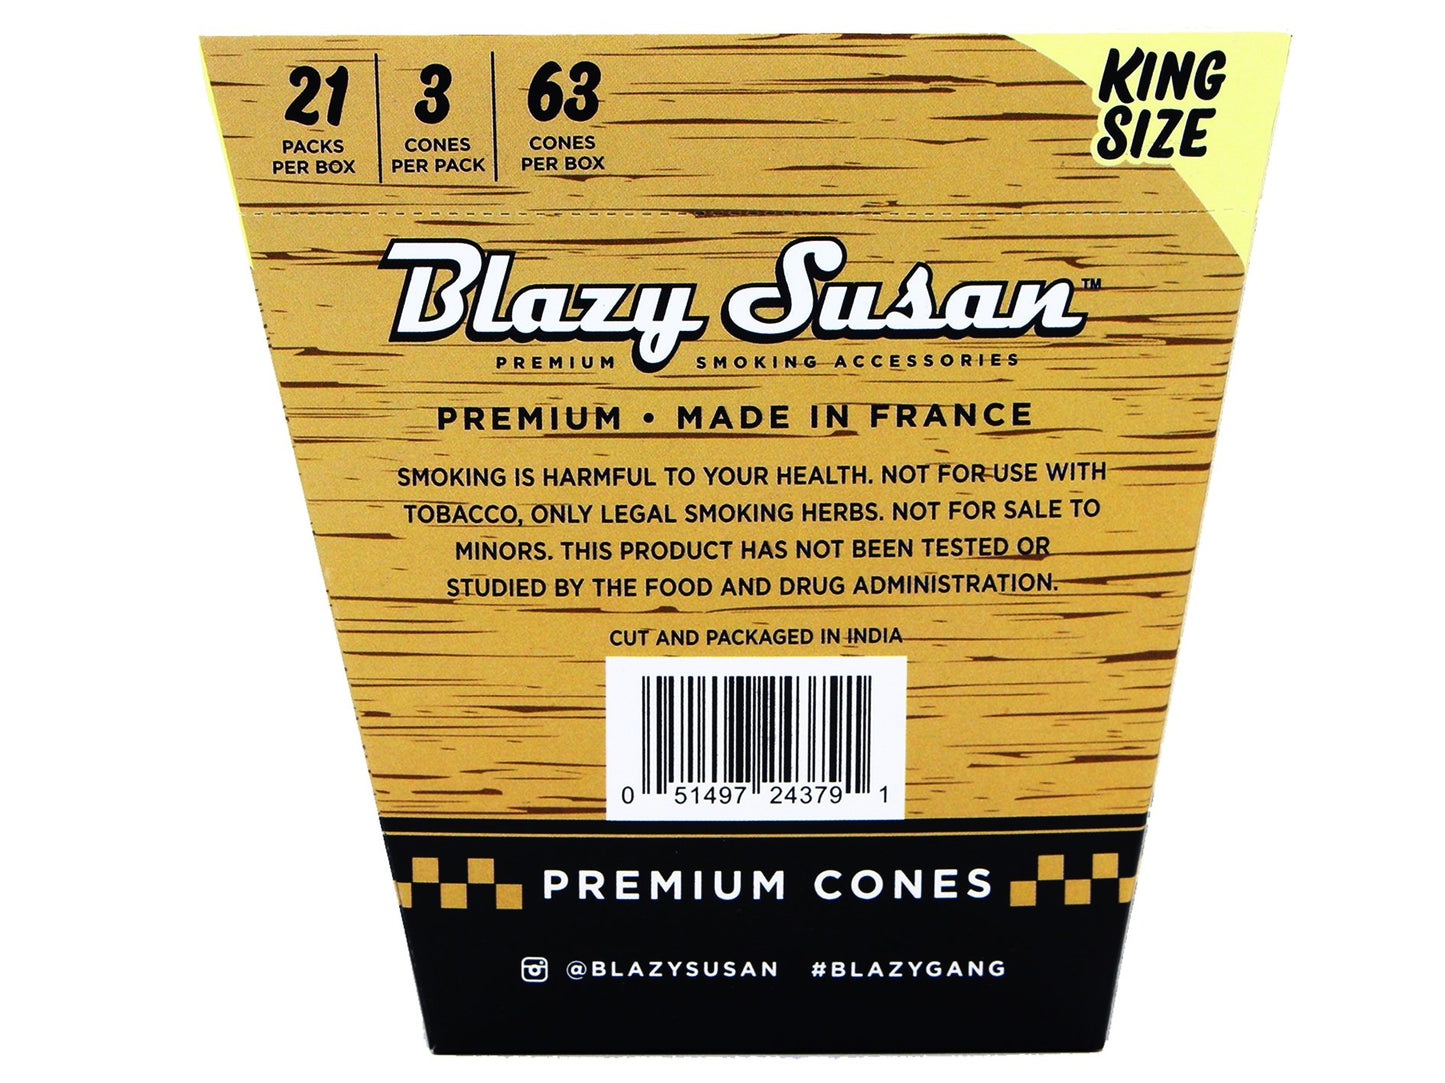 BLAZY SUSAN Premium King Size Unbleached Cones 3 Cones Per Pack 21 Packs Per Box - VIR Wholesale